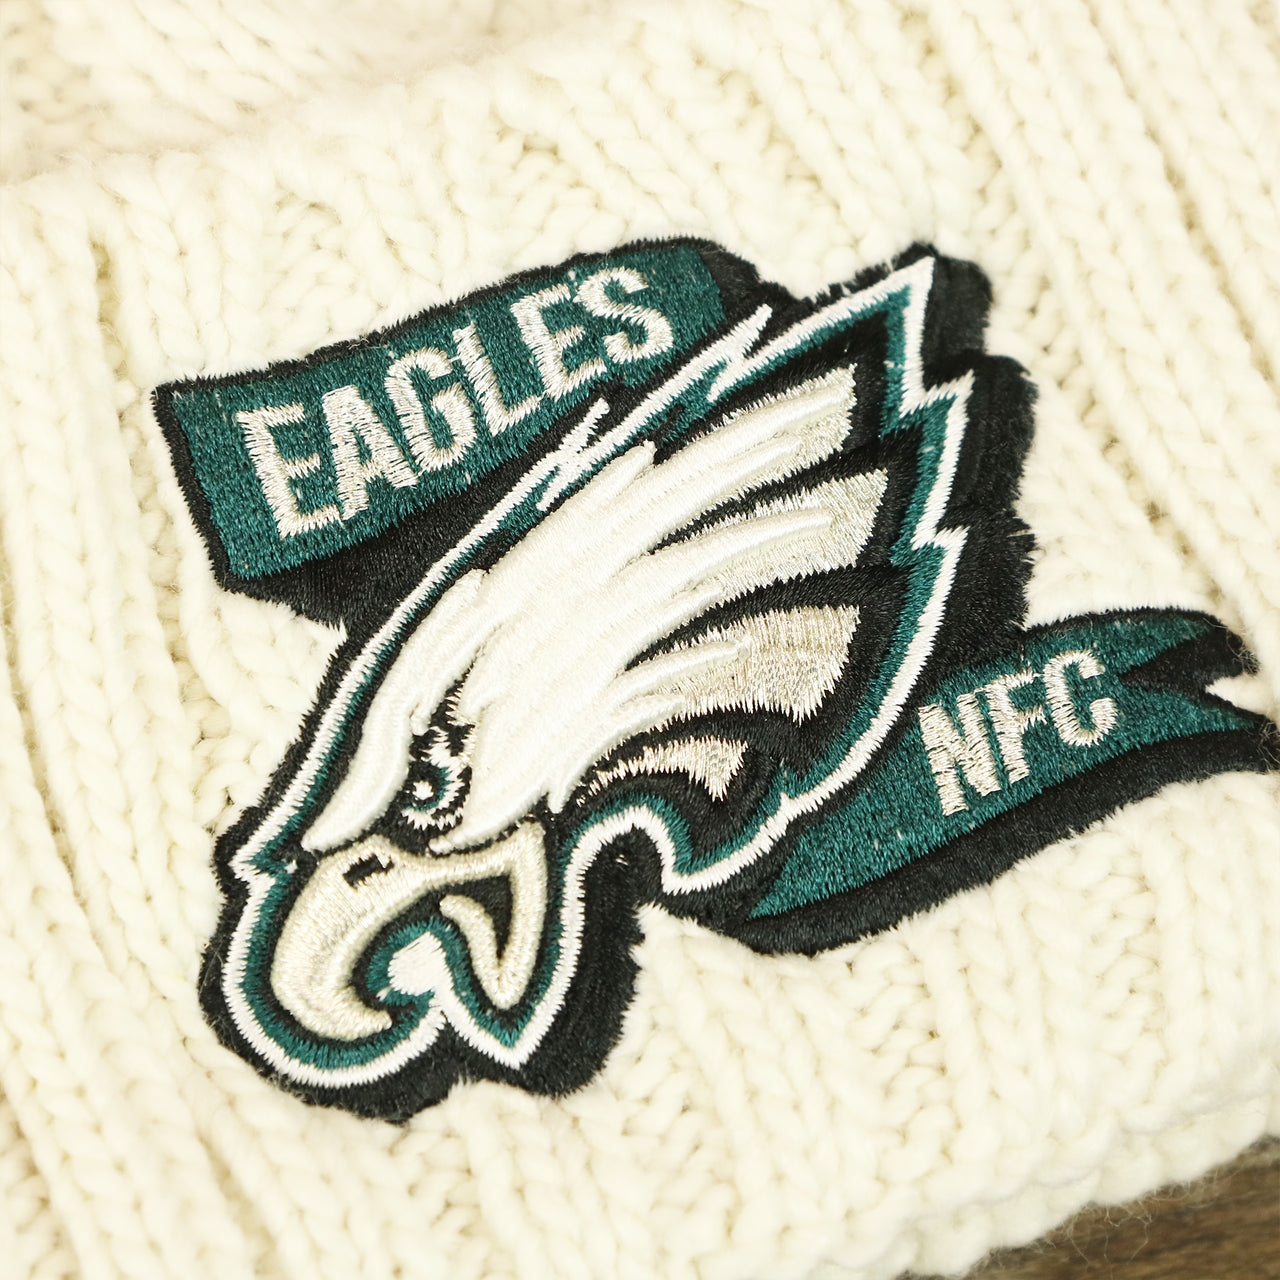 The Eagles NFC Logo on the Women’s Philadelphia Eagles 2022 NFC Cuffed Winter Knit Meeko Pom Pom Beanie | Women’s White Winter Beanies